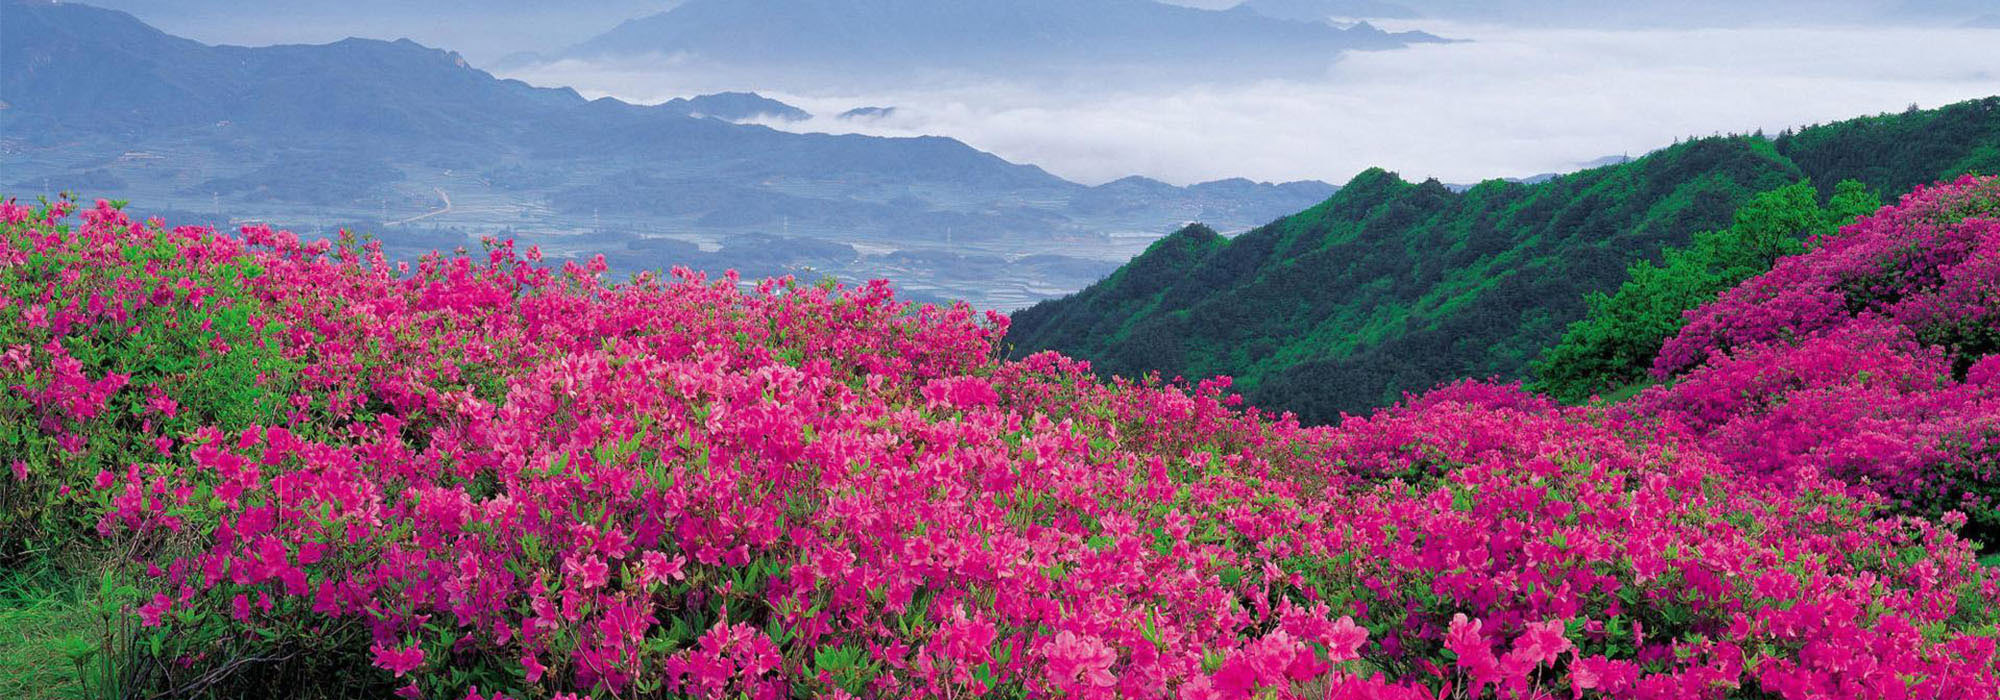 Bhutan Rhododendron festival